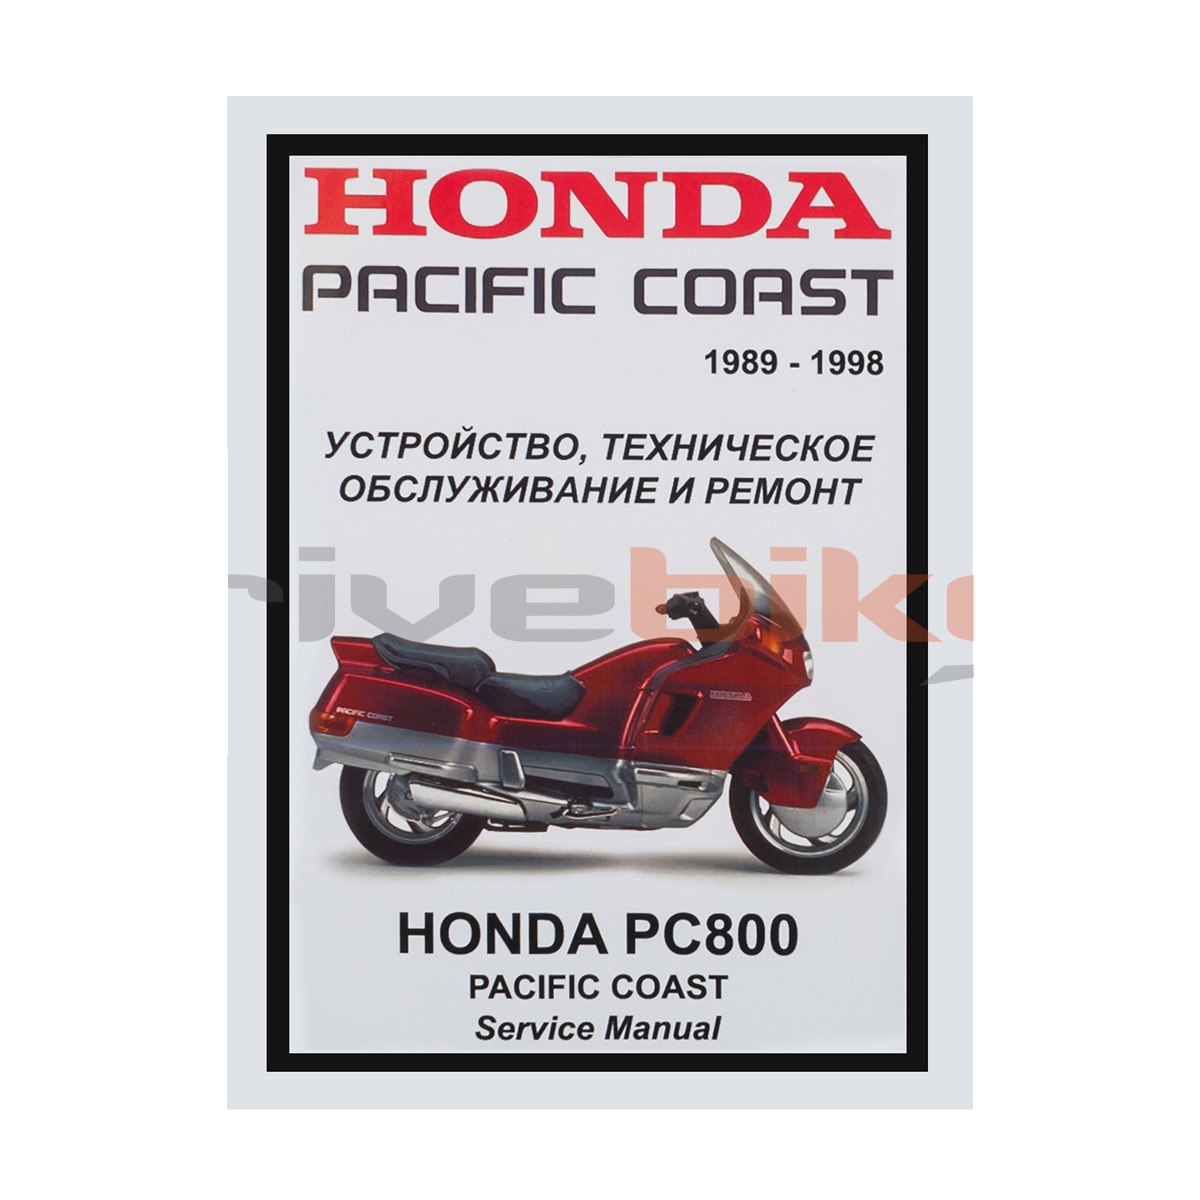 Мануалы и документация для Honda PC800 (Pacific Coast)